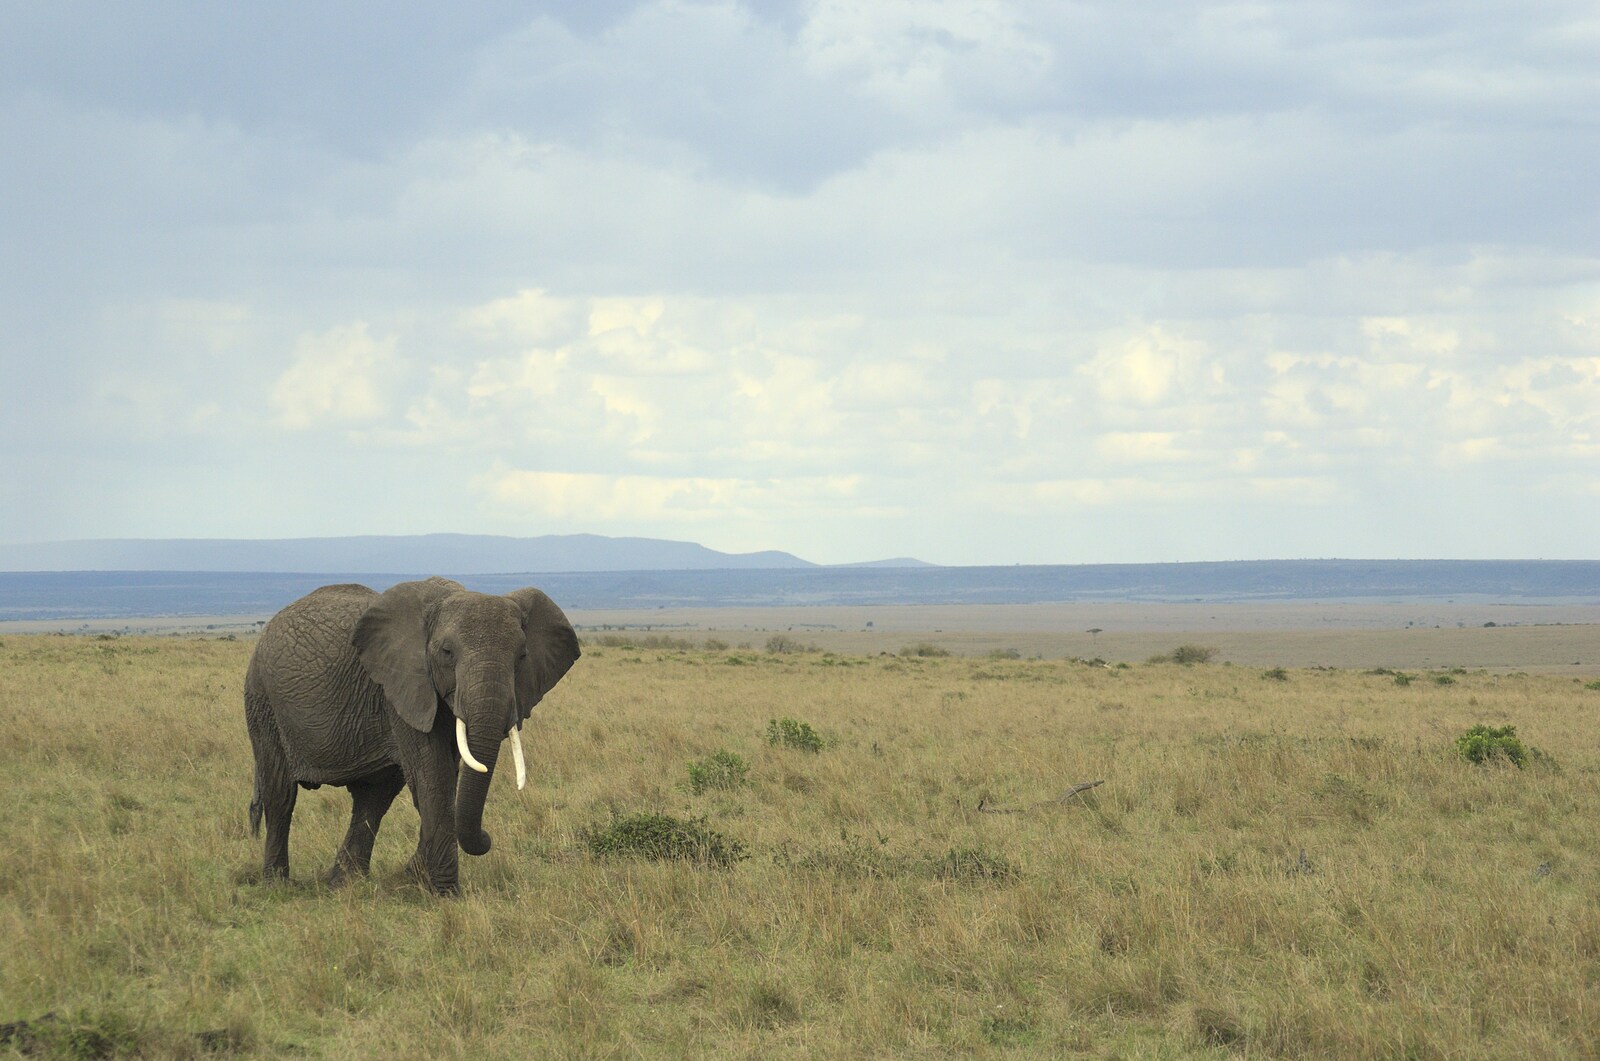 Maasai Mara Safari and a Maasai Village, Ololaimutia, Kenya - 5th November 2010: A lone elephant on the plains